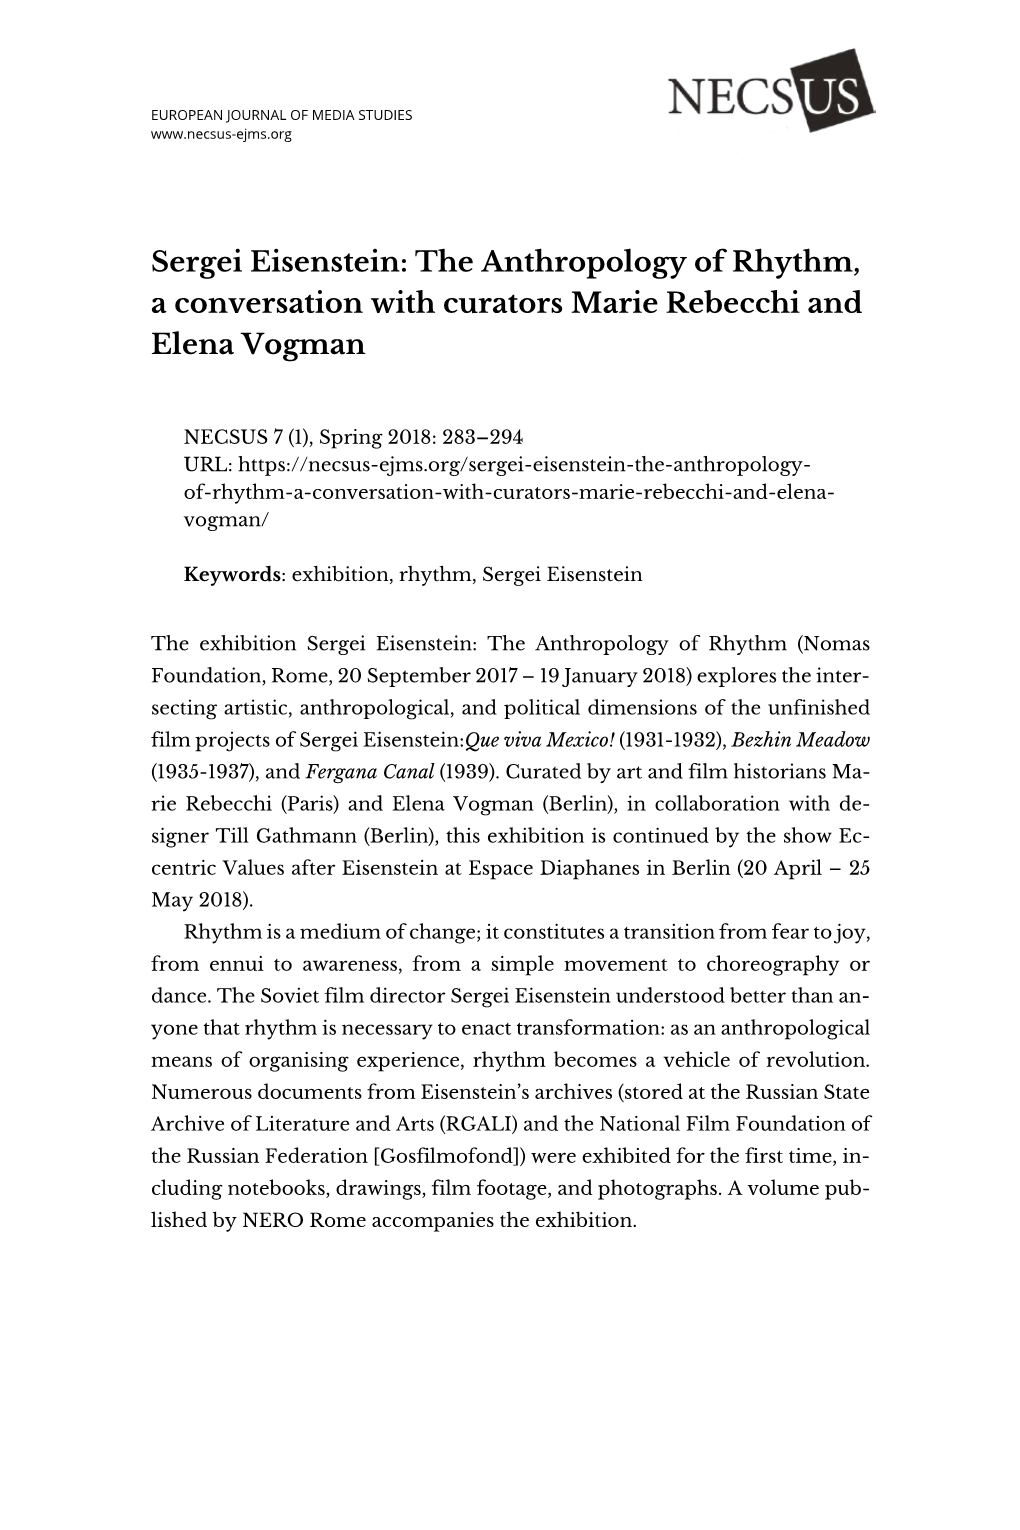 Sergei Eisenstein: the Anthropology of Rhythm, a Conversation with Curators Marie Rebecchi and Elena Vogman